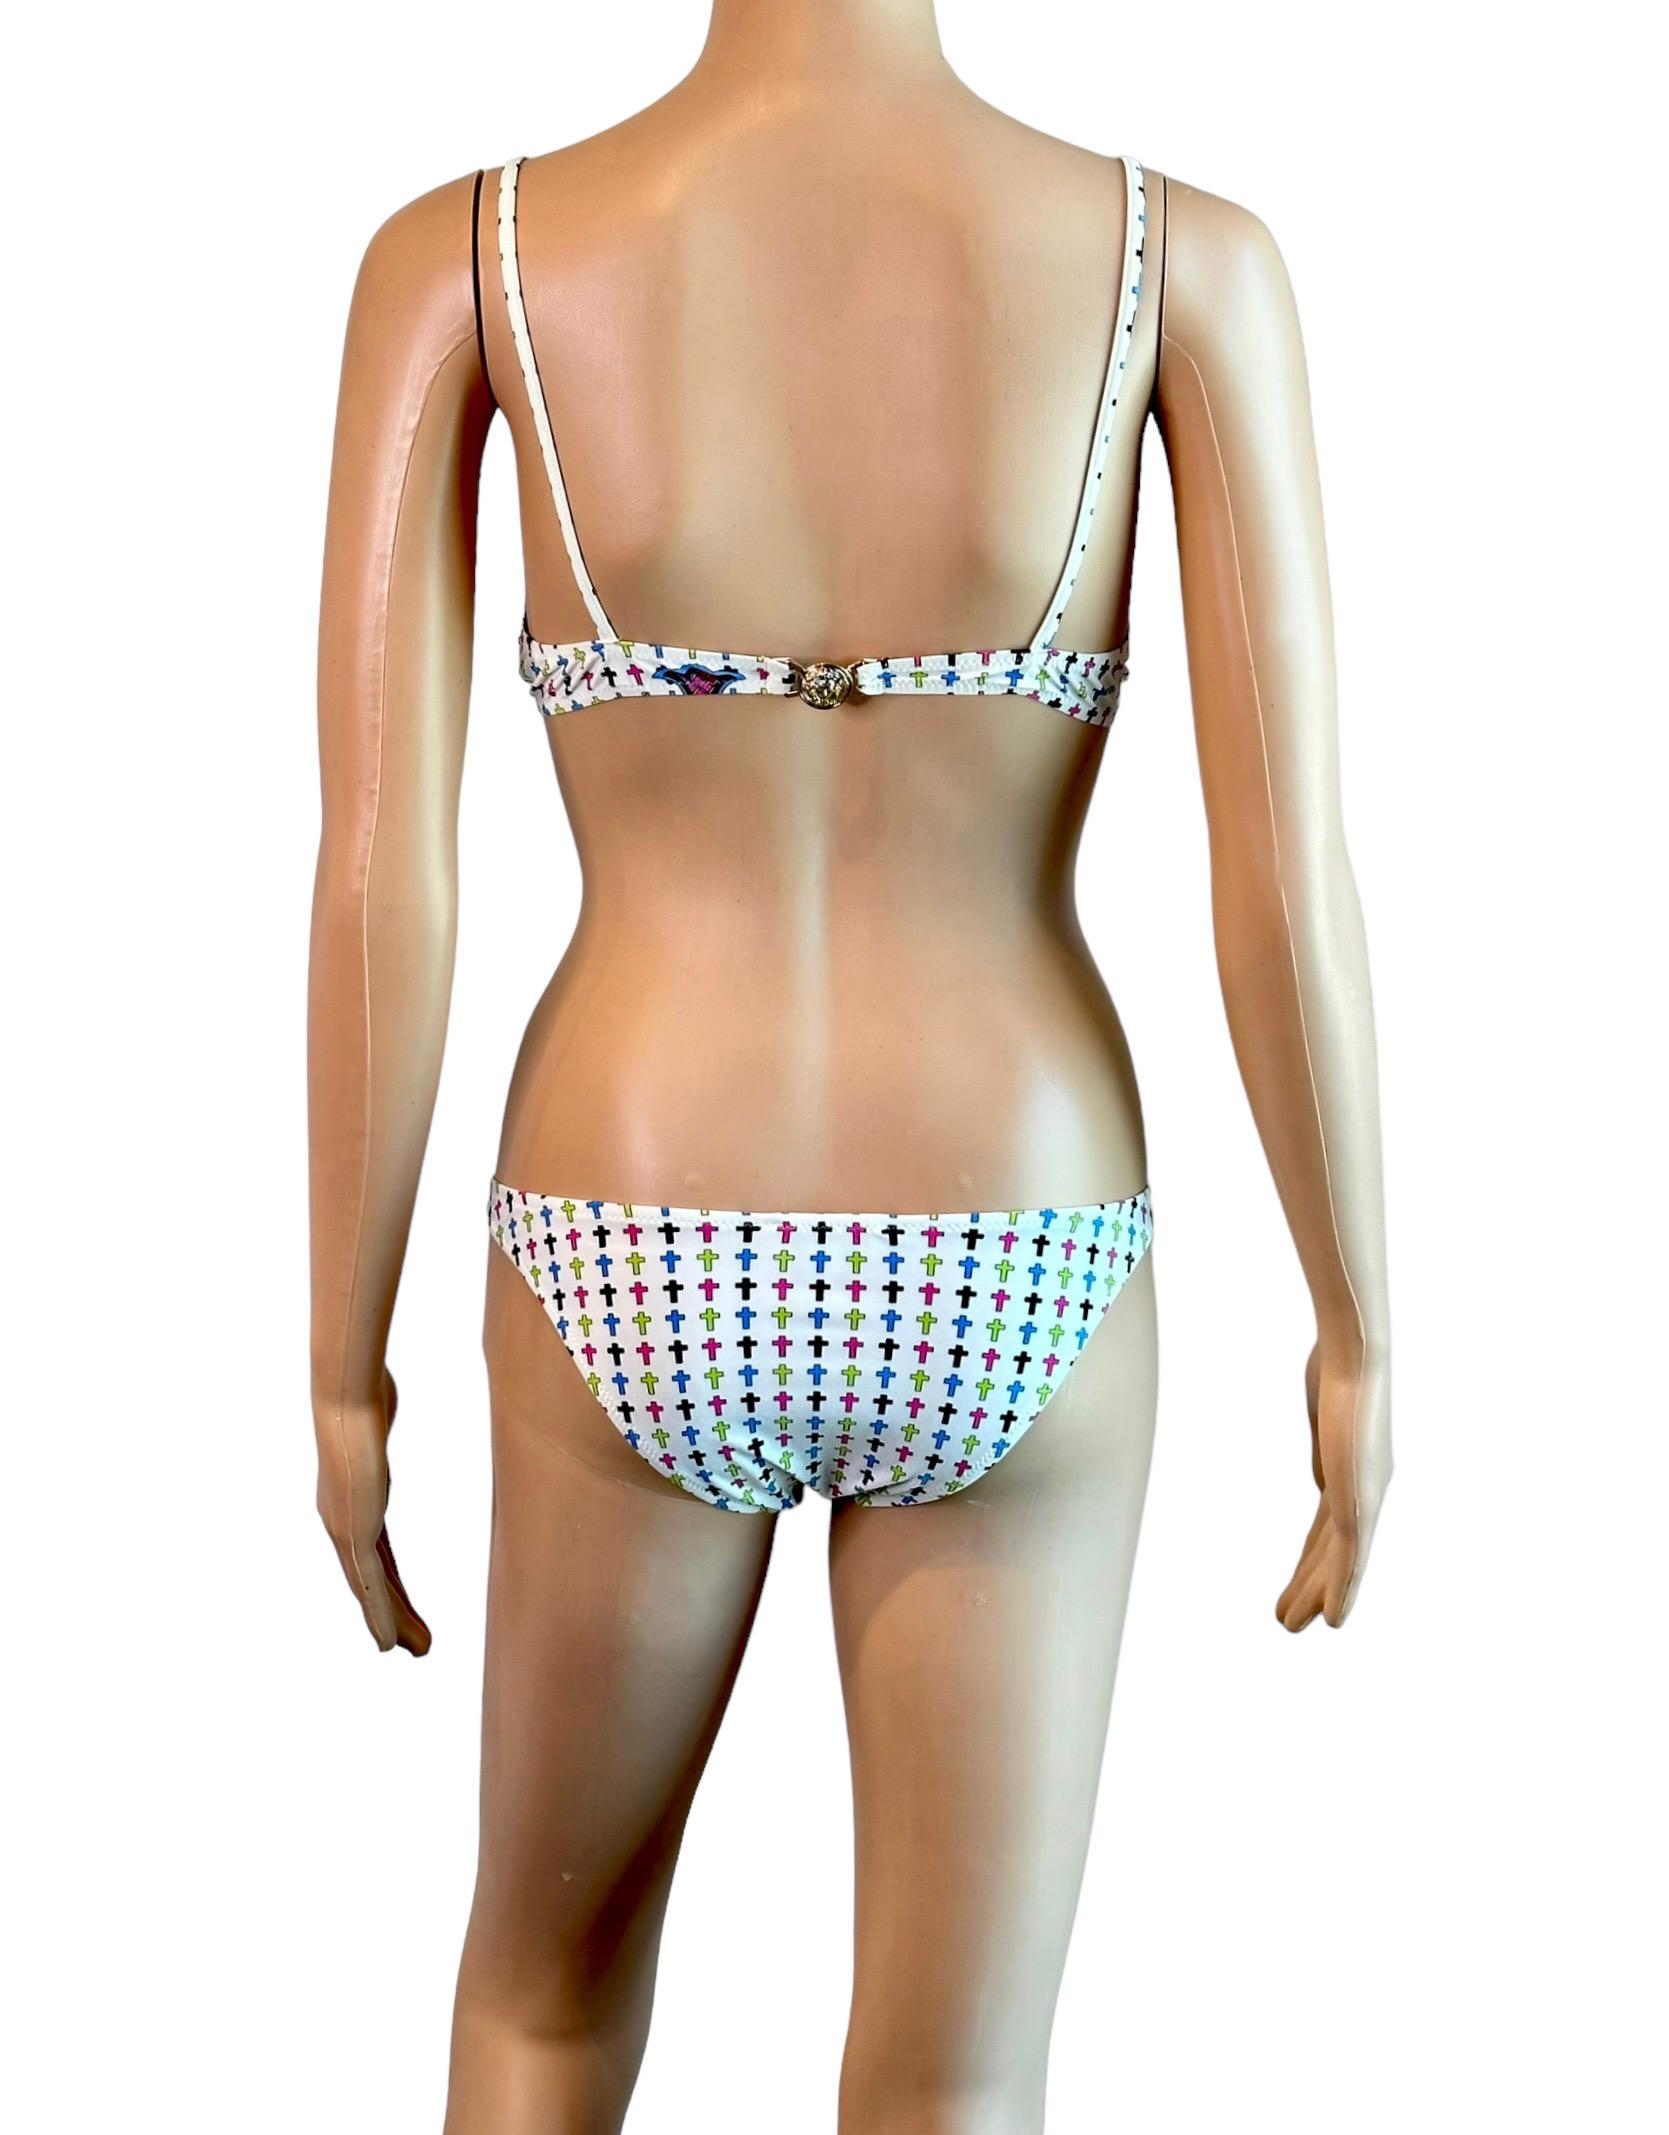 Versace S/S 2005 Medusa Logo Embellished Two-Piece Bikini Set Swimsuit Swimwear IT 42

FOLLOW US ON INSTAGRAM @OPULENTADDICT